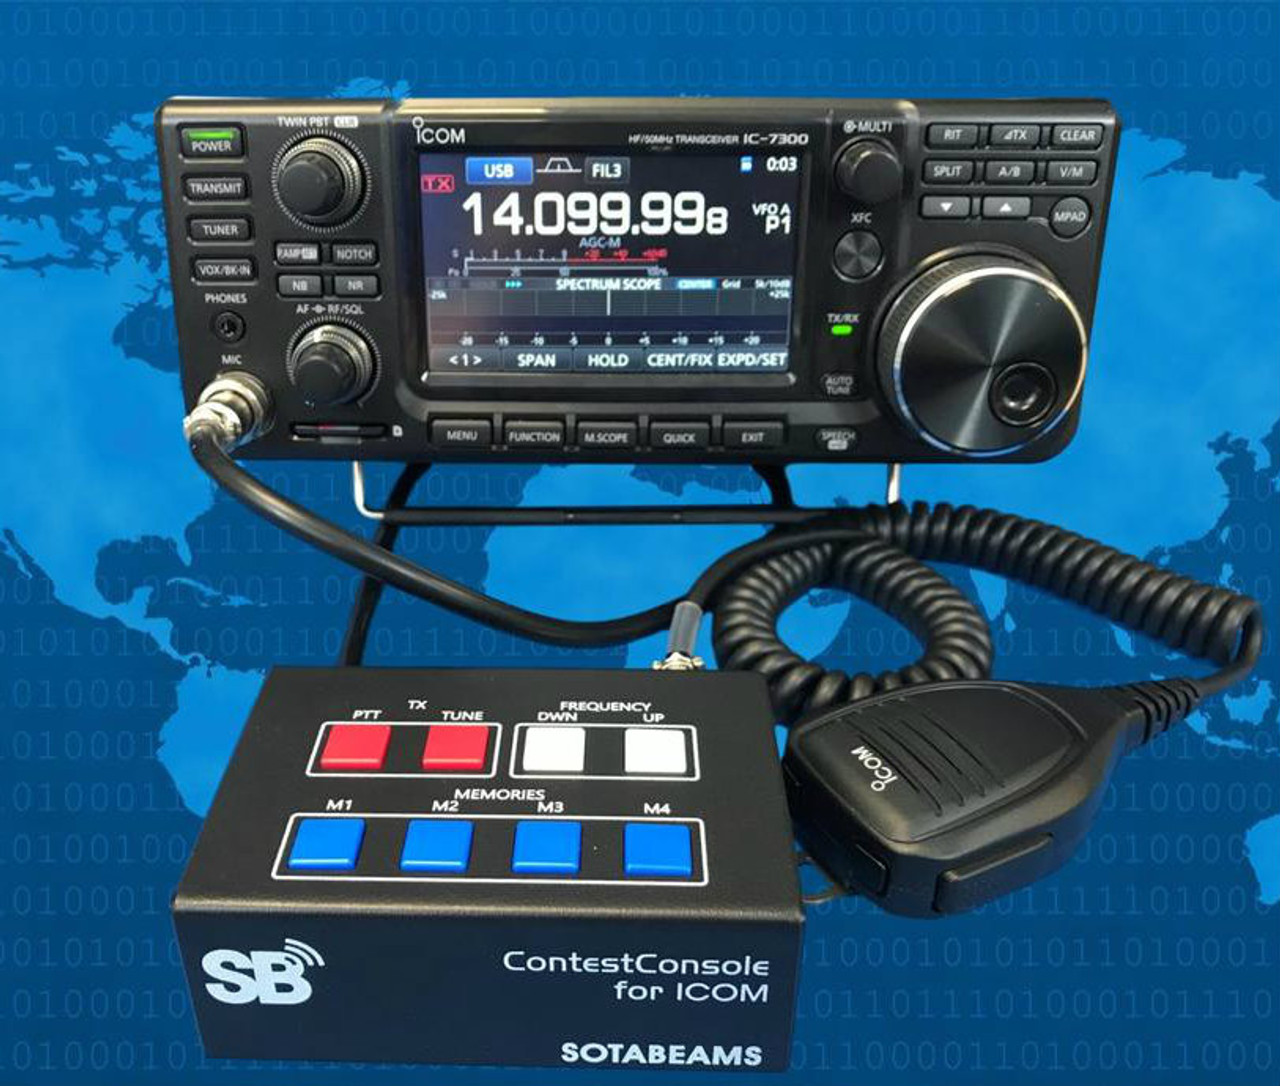 ContestConsole switching unit for ICOM radios pic